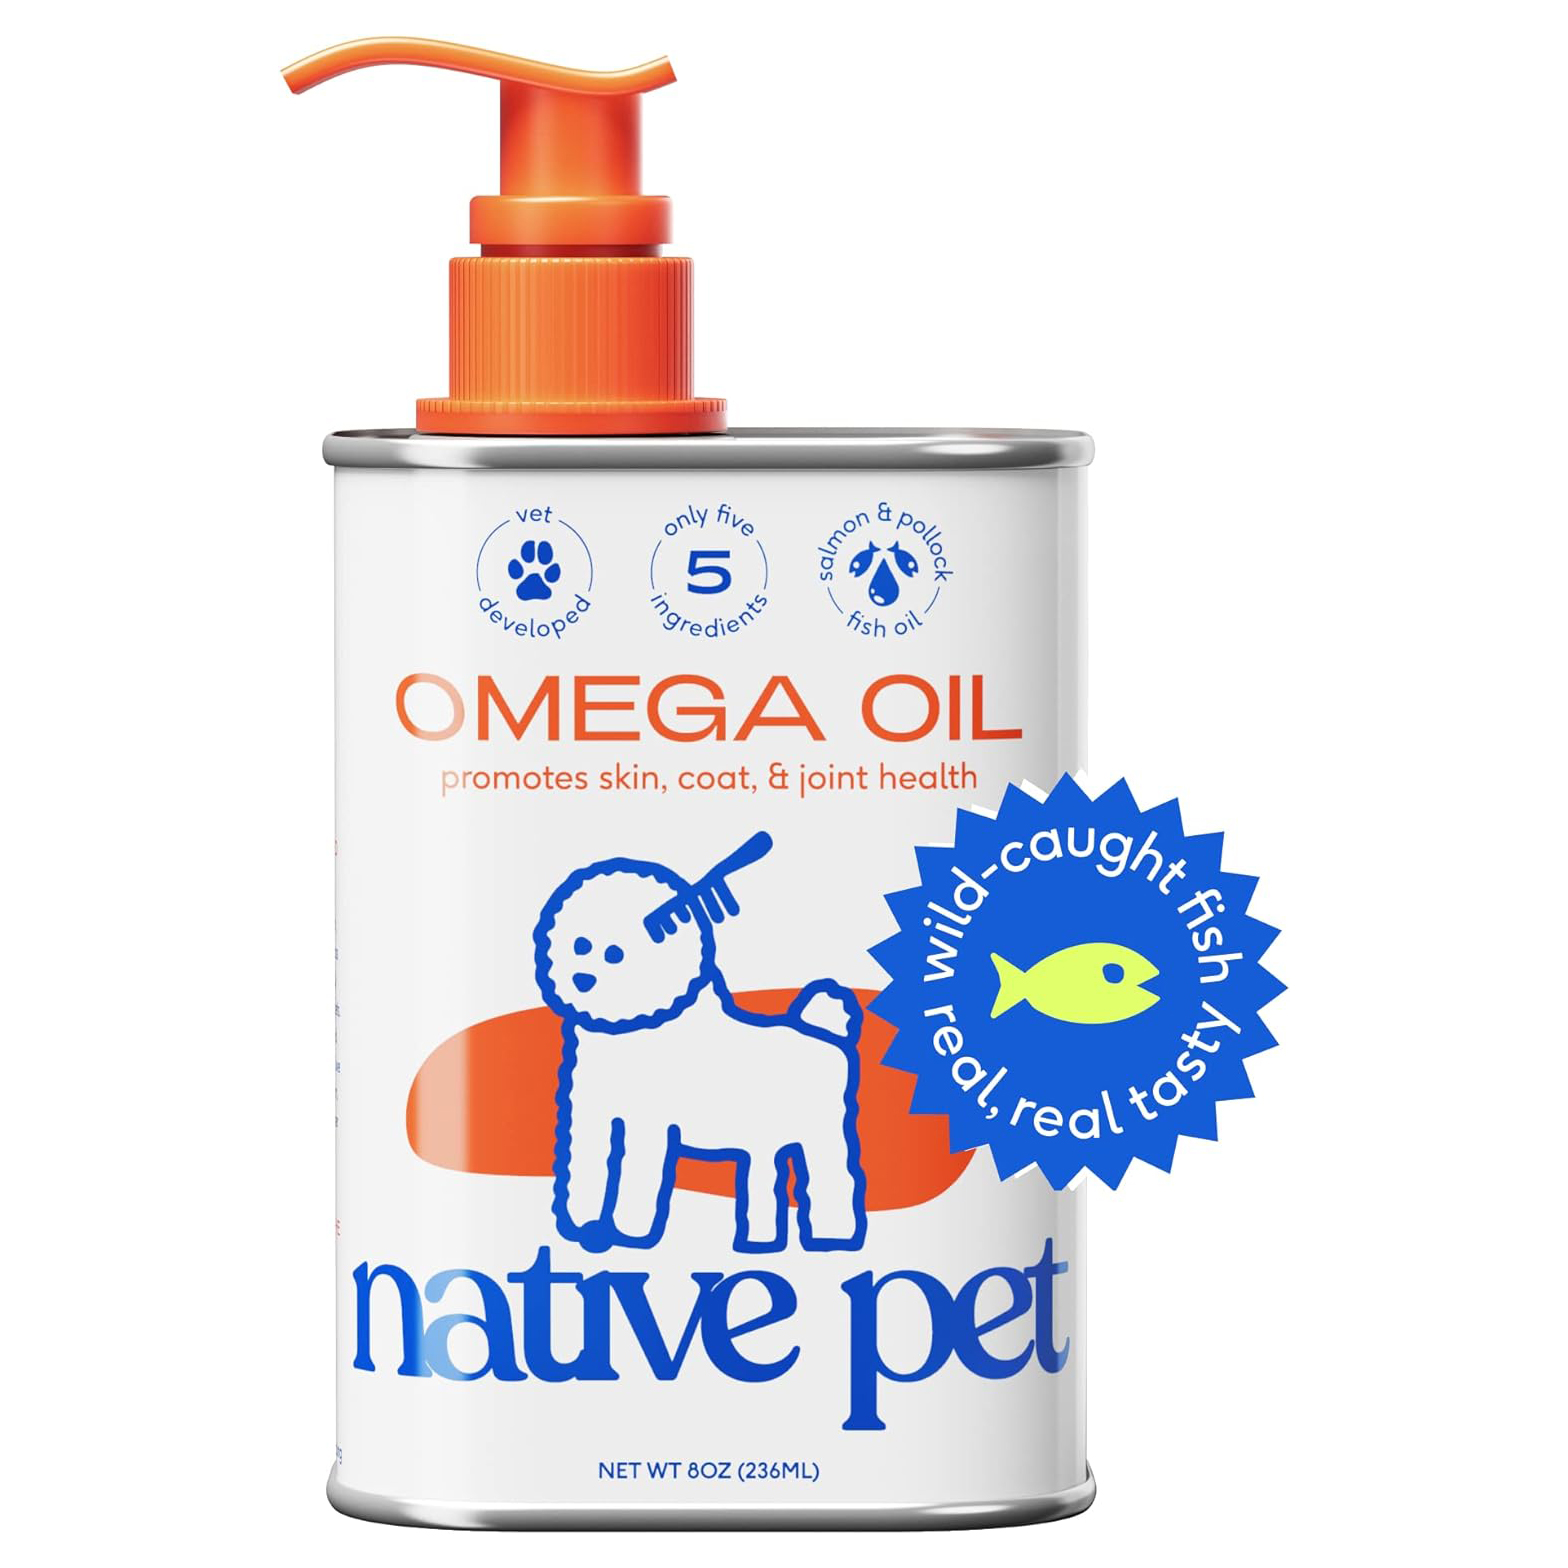 Native Pet Omega 3 Fish Oil Skin & Coat Health Dog Supplement